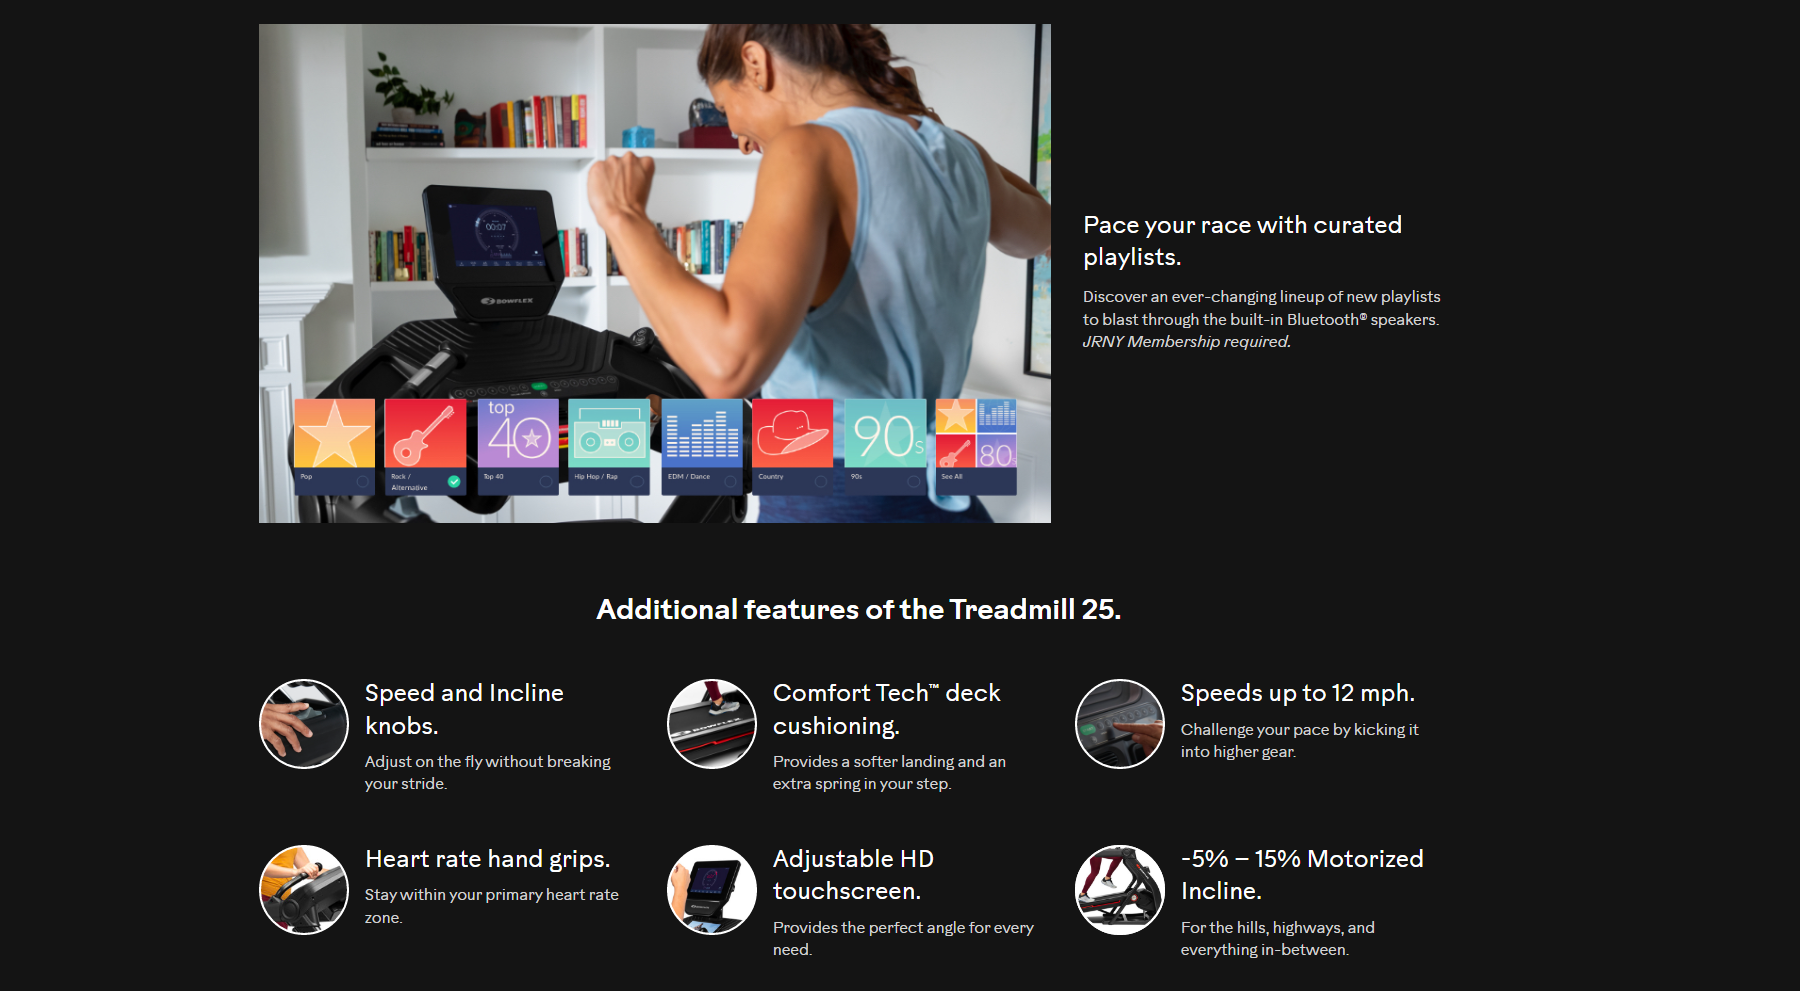 Bowflex Treadmill 25 features